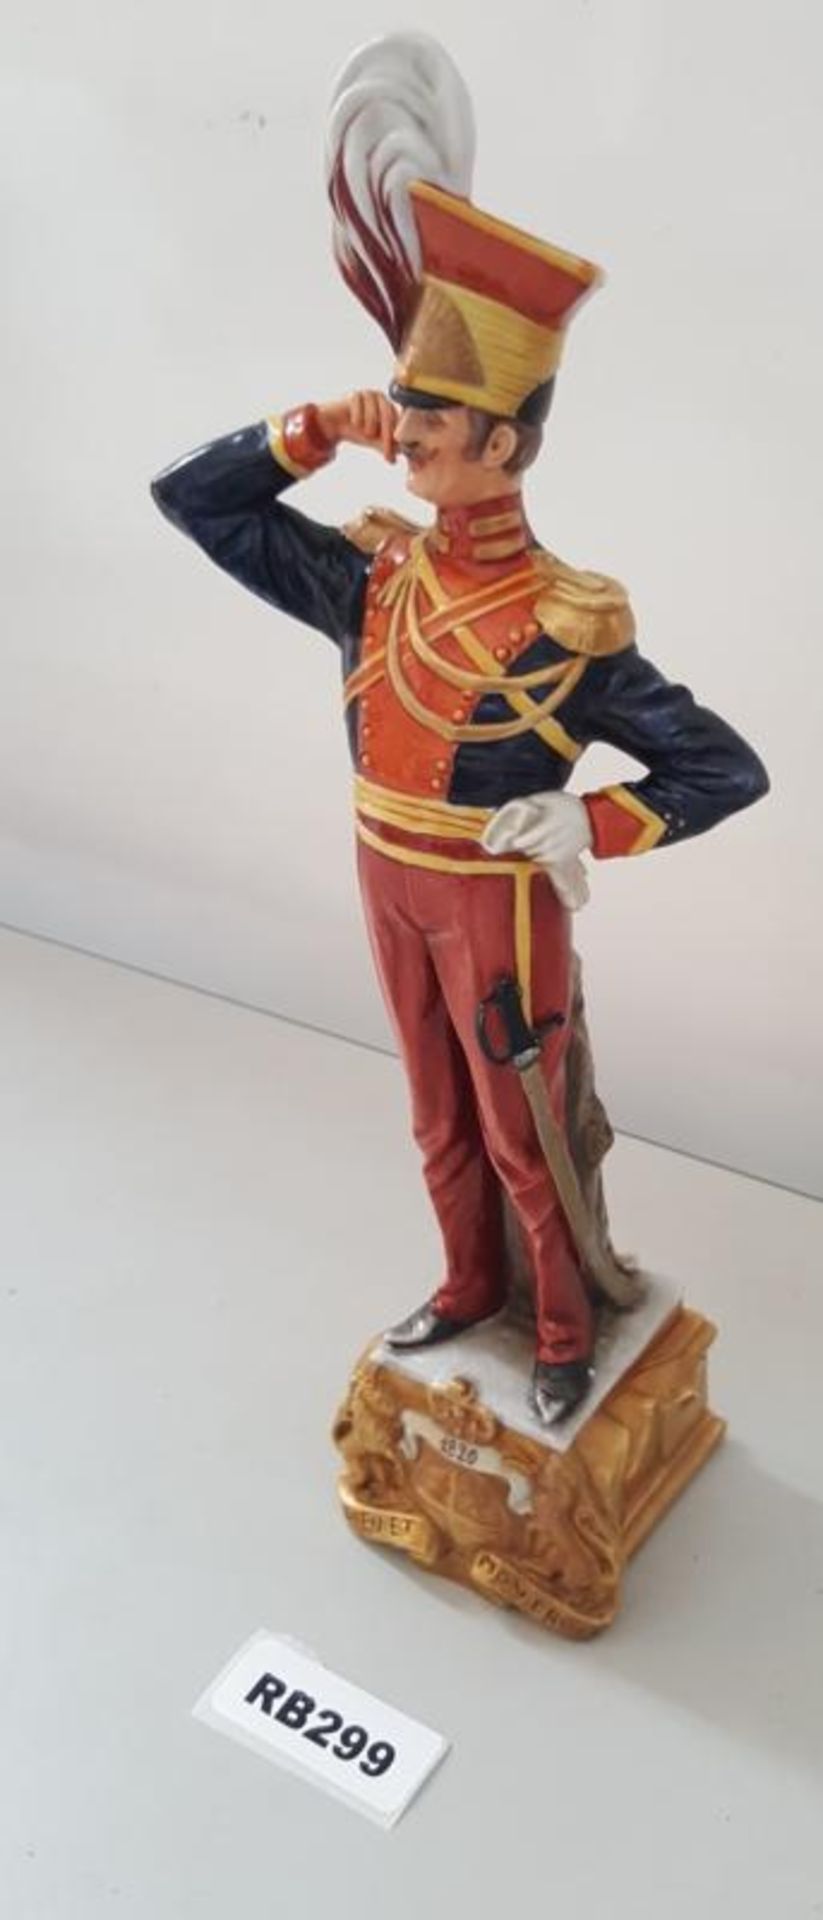 1 x Rare Italian Capodimonte Porcelain Bruno Merli Soldiers Figurines 1820- Ref RB299 E - Image 3 of 5